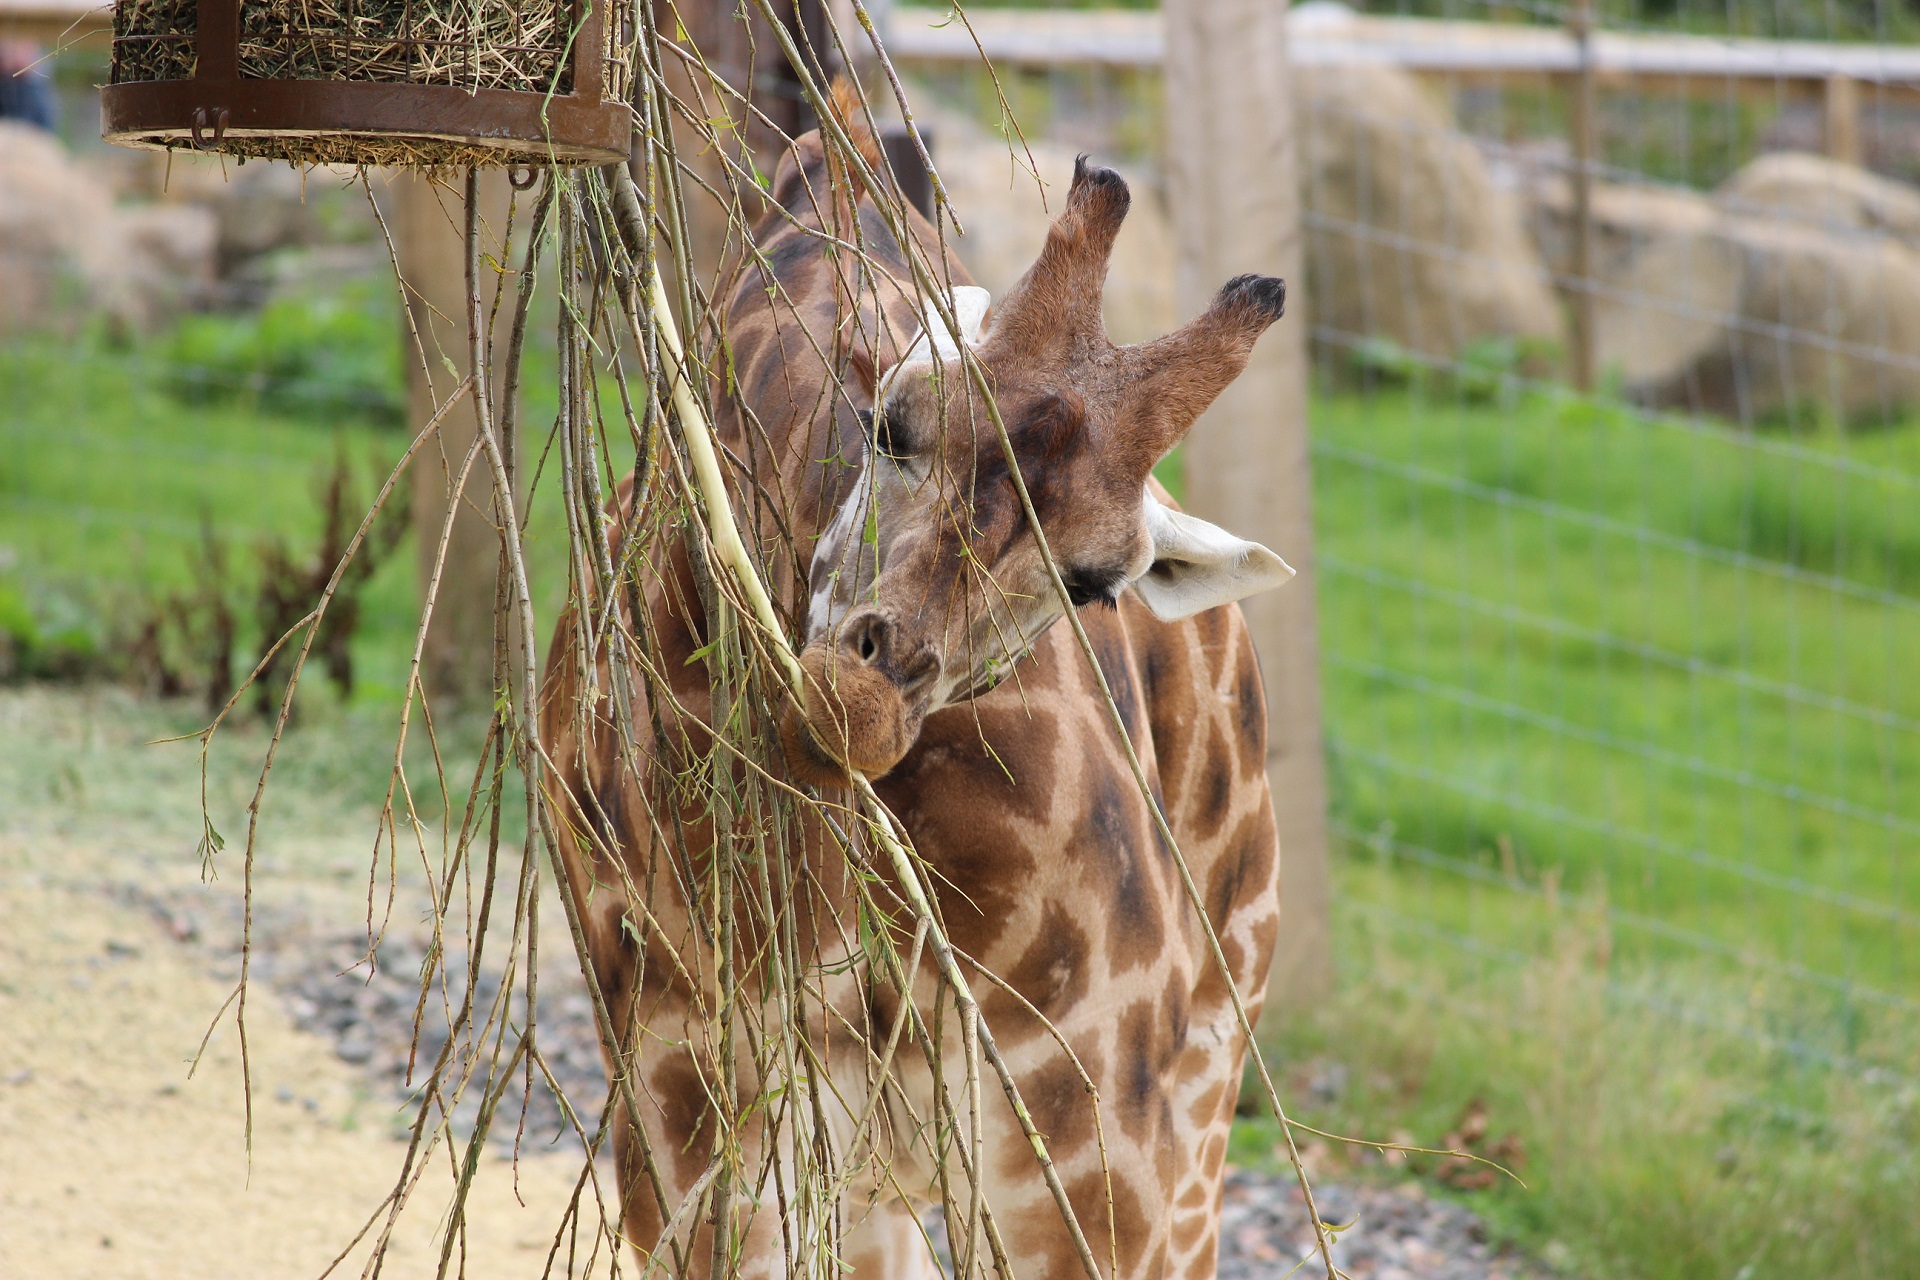 Giraffe eating from feeder

IMAGE: Hollie Watson 2022